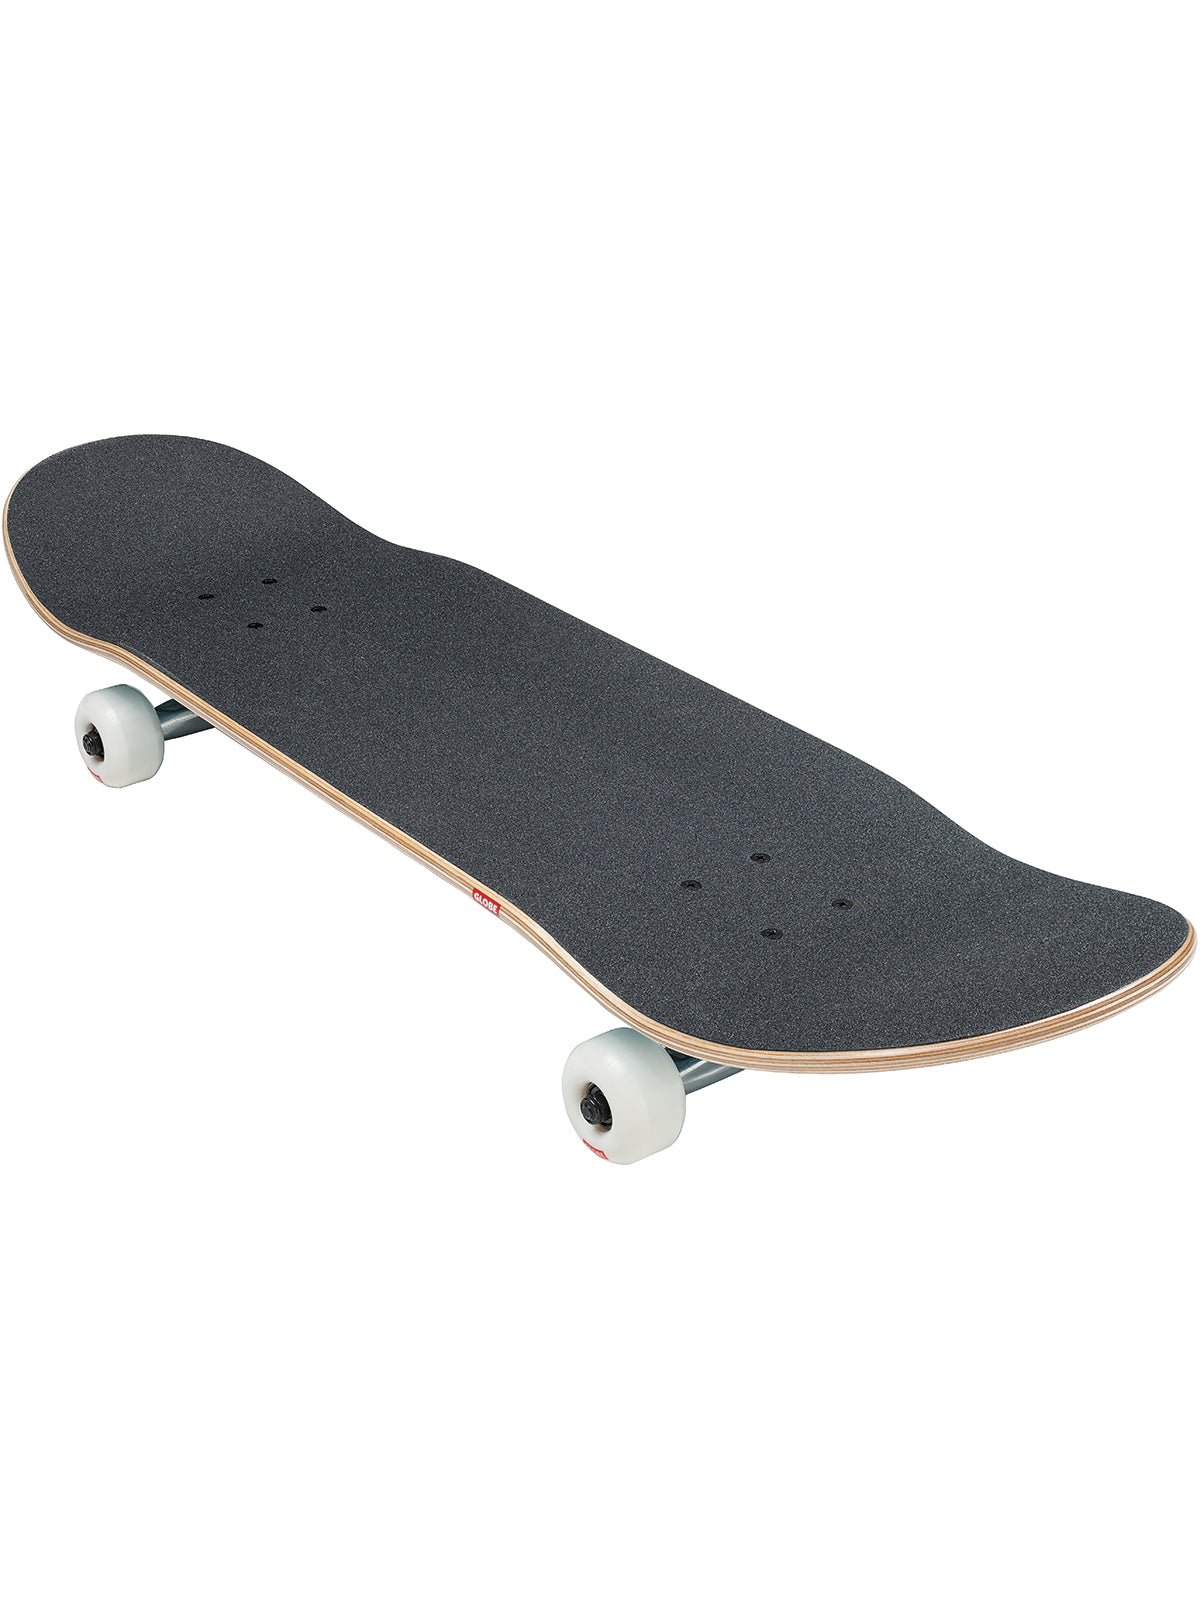 Globe Skateboard completa Goodstock in Steel Blue